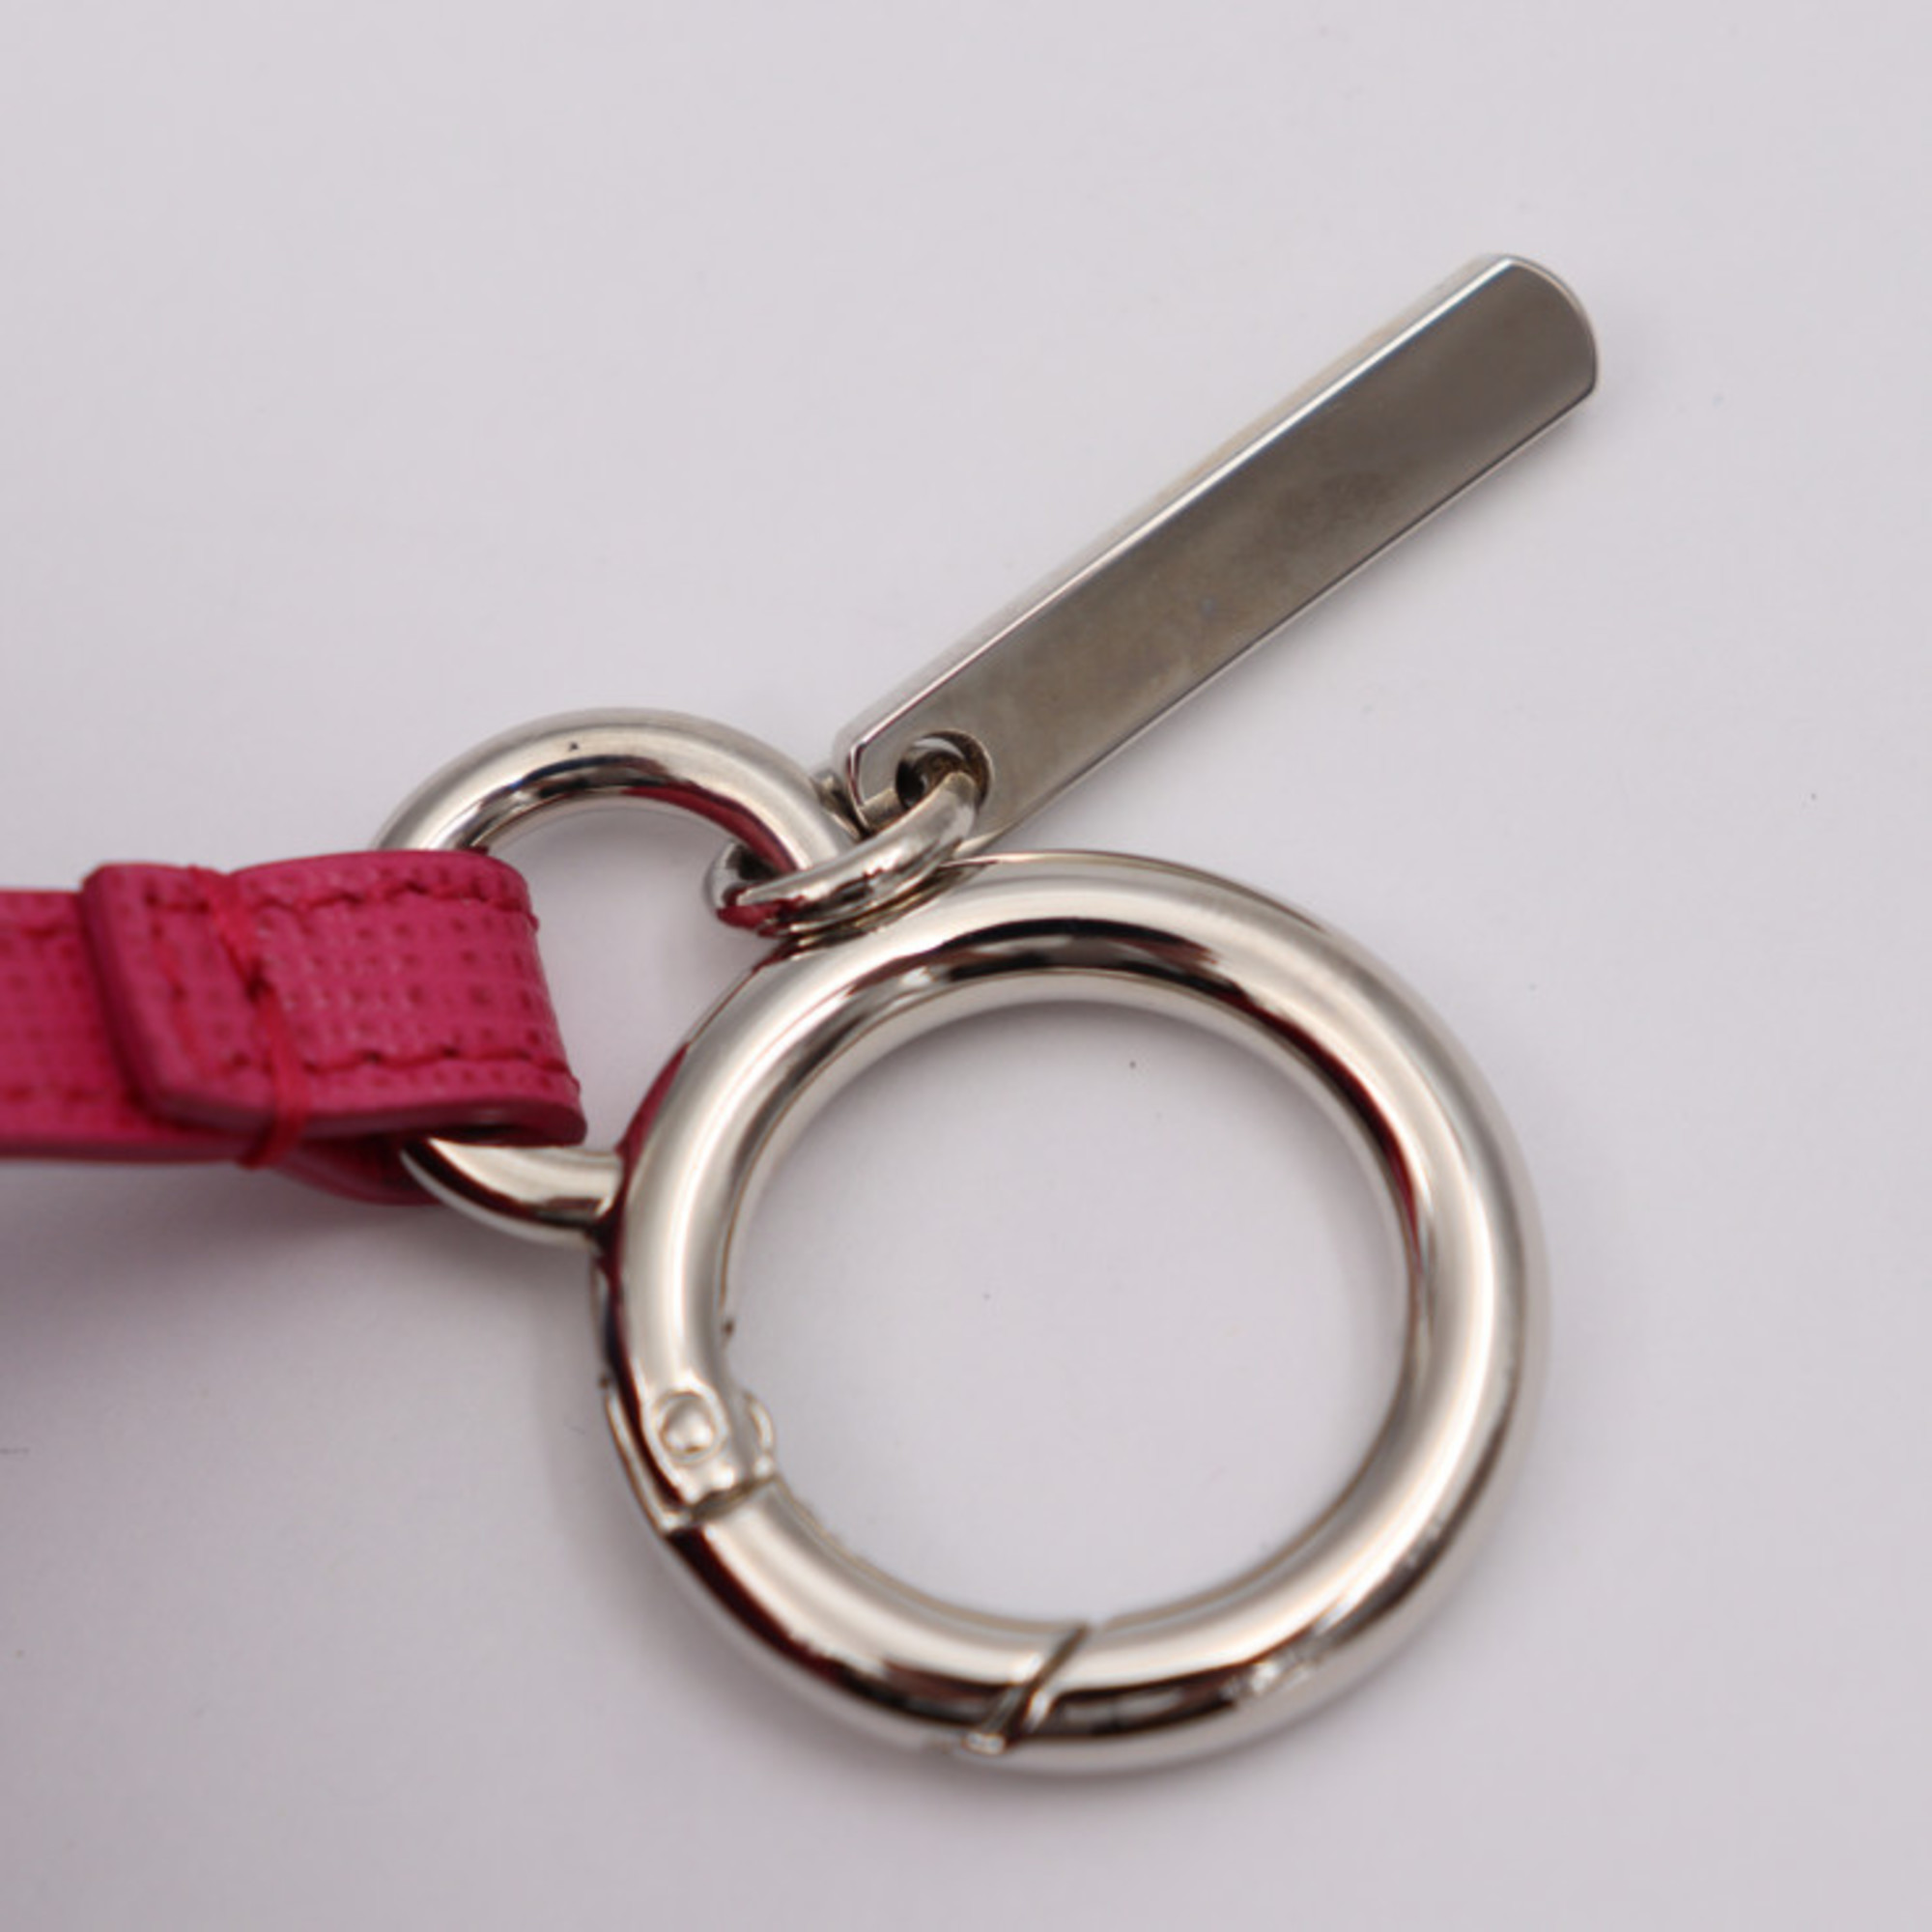 FENDI Fendi pompom charm fur navy red key holder ring silver metal fittings